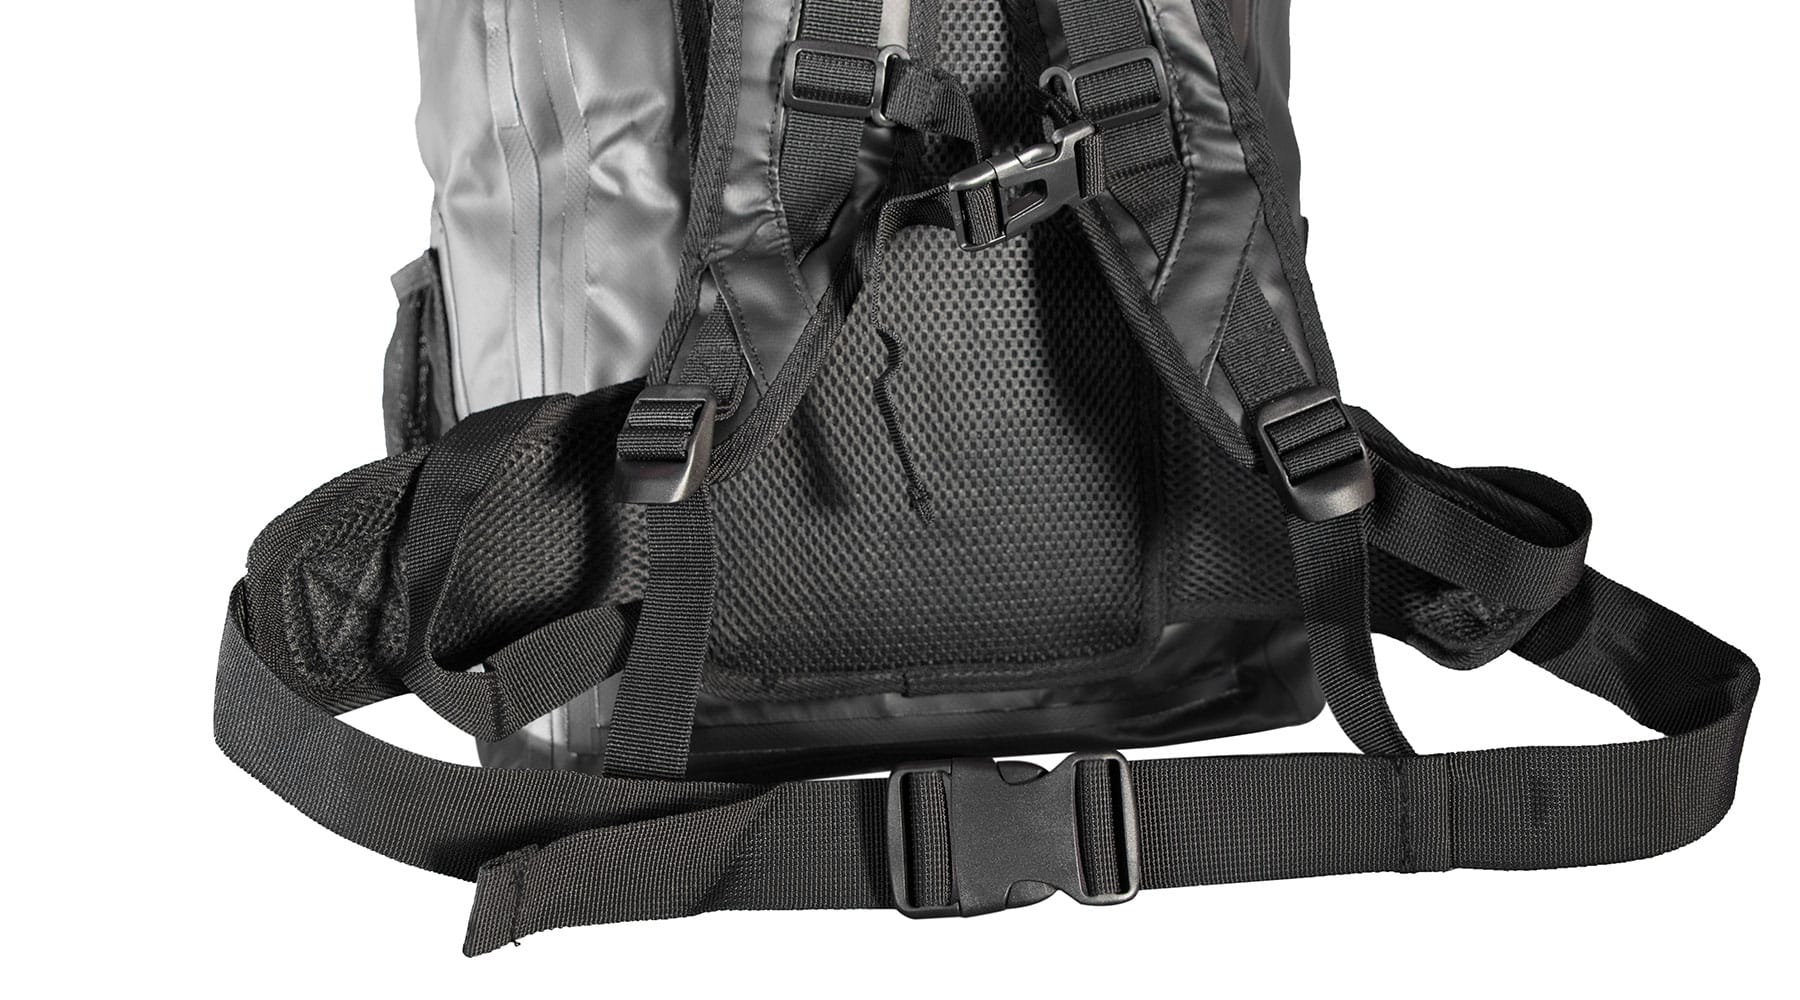 Large waterproof dry bag in black 45 L carry lots kit & padded rucksack straps. 